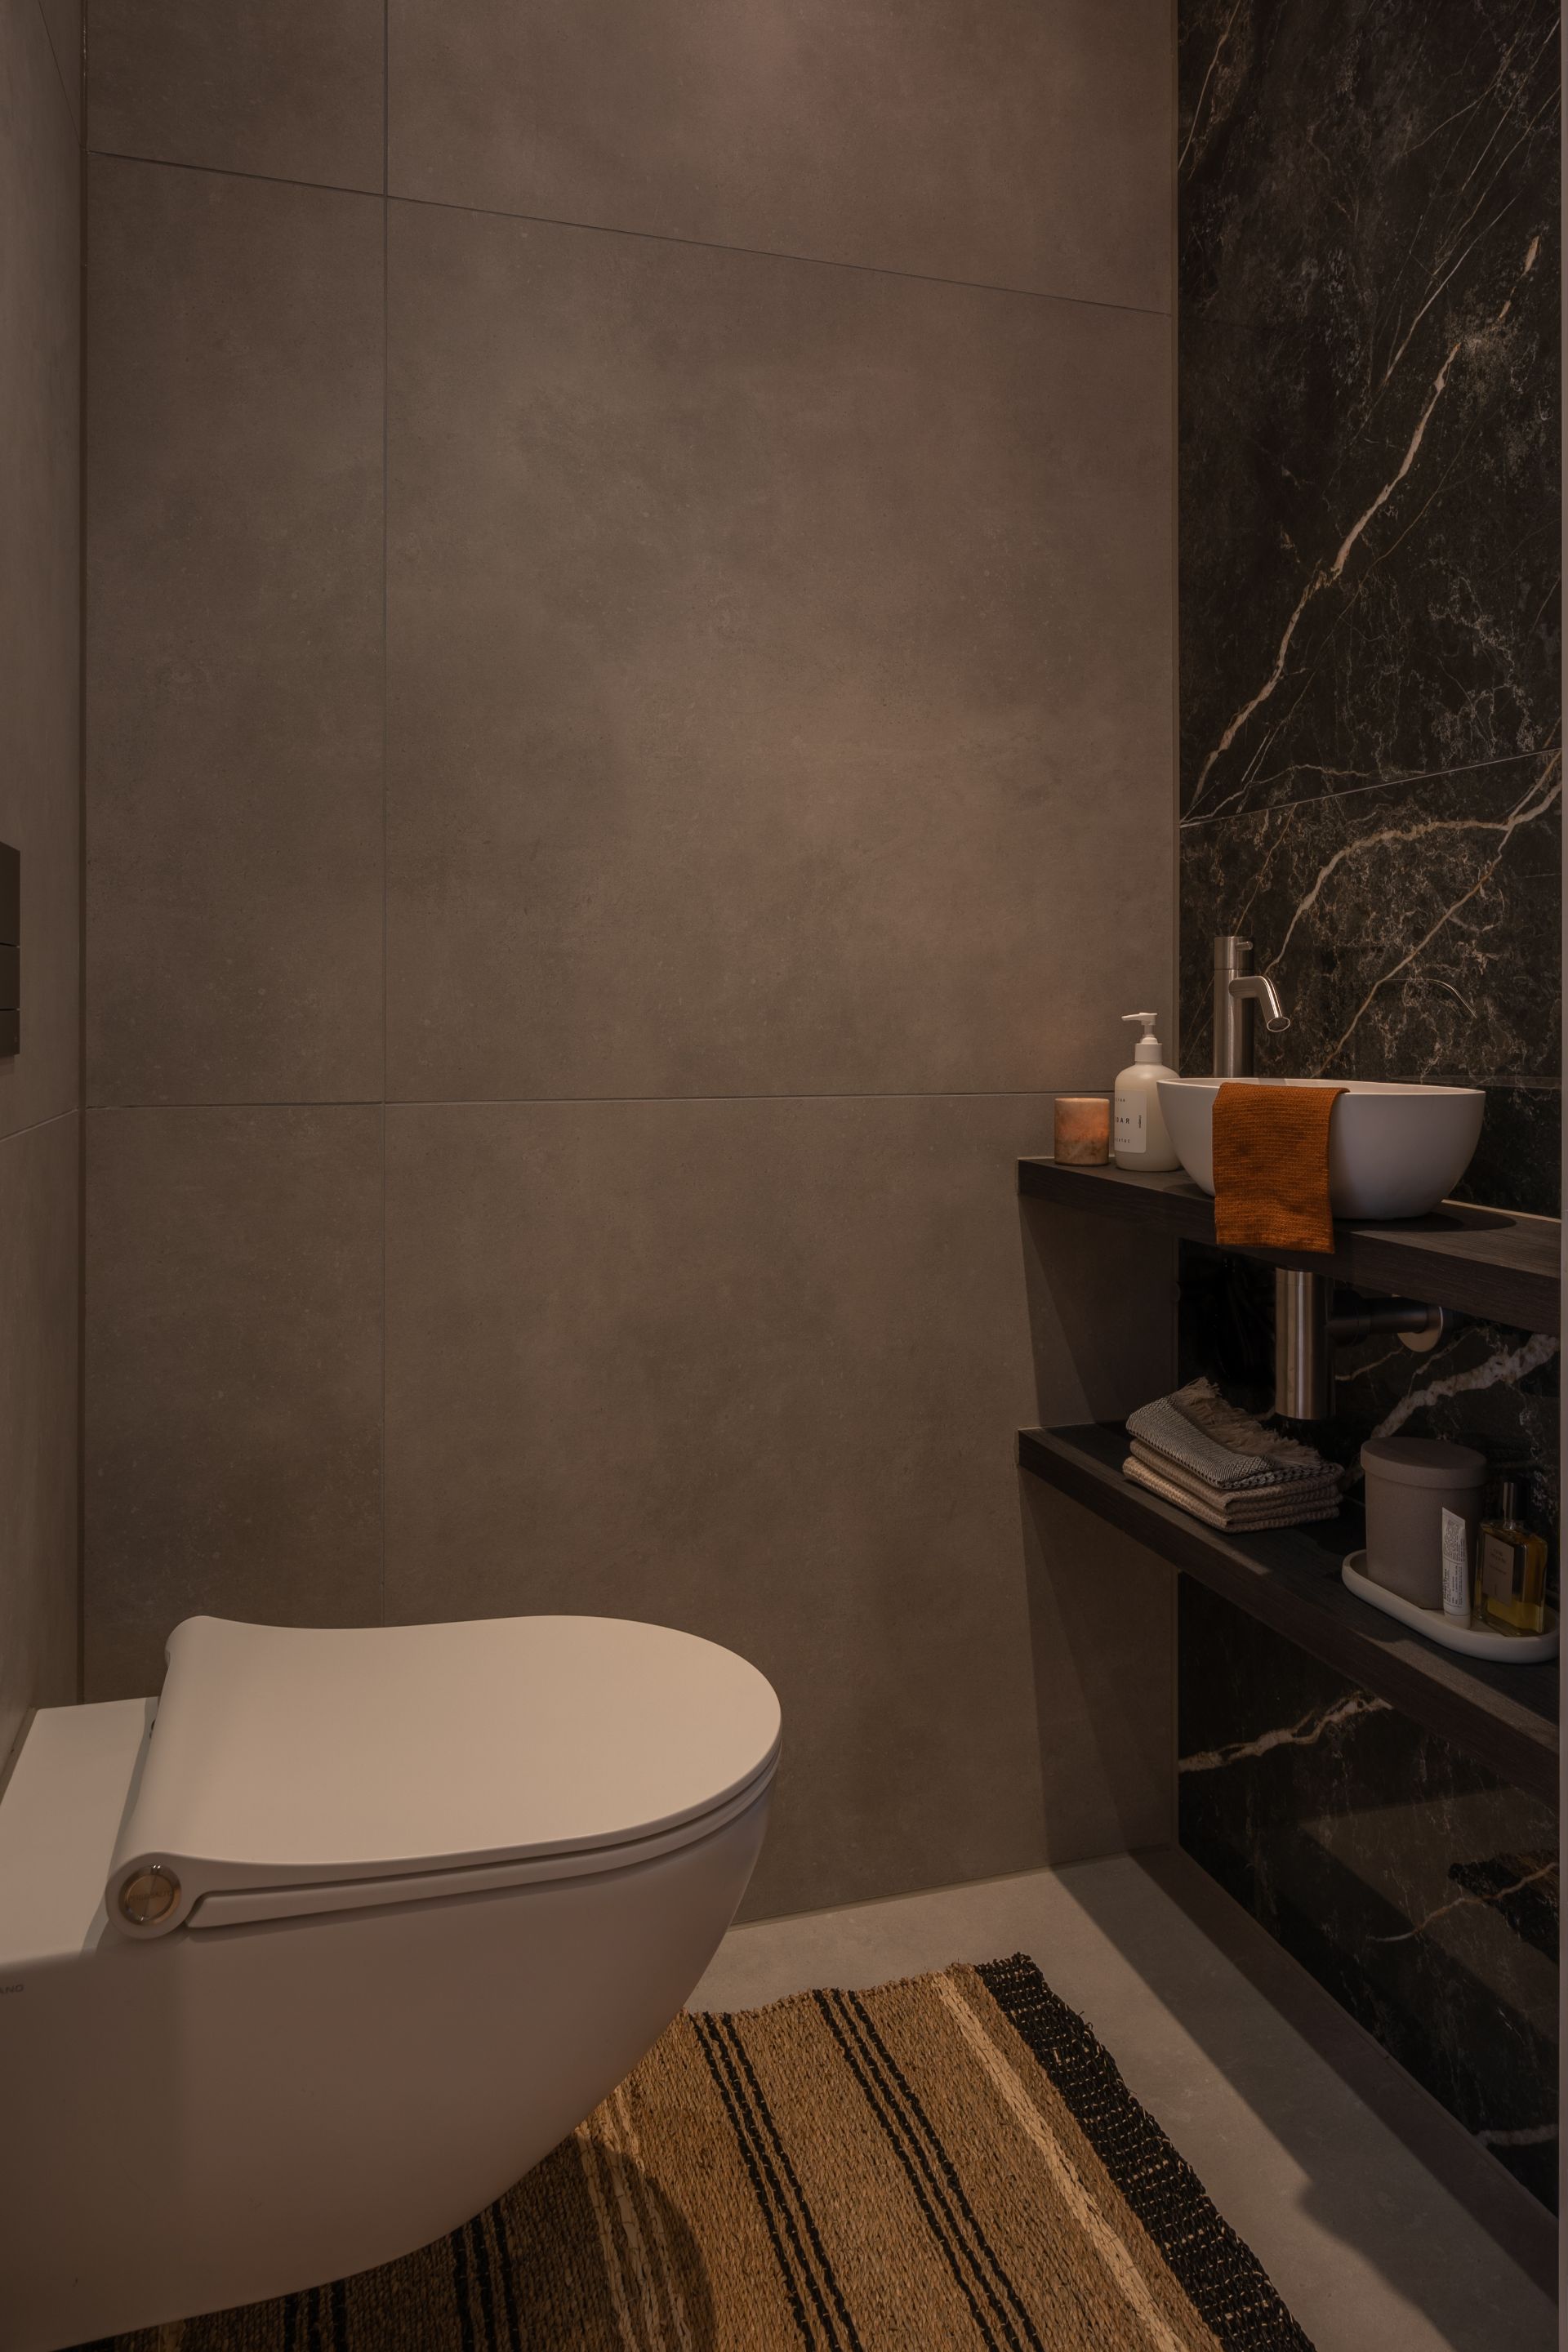 Foto: jaloersmakende  moderne kleine badkamer  eerste kamer badkamers   012